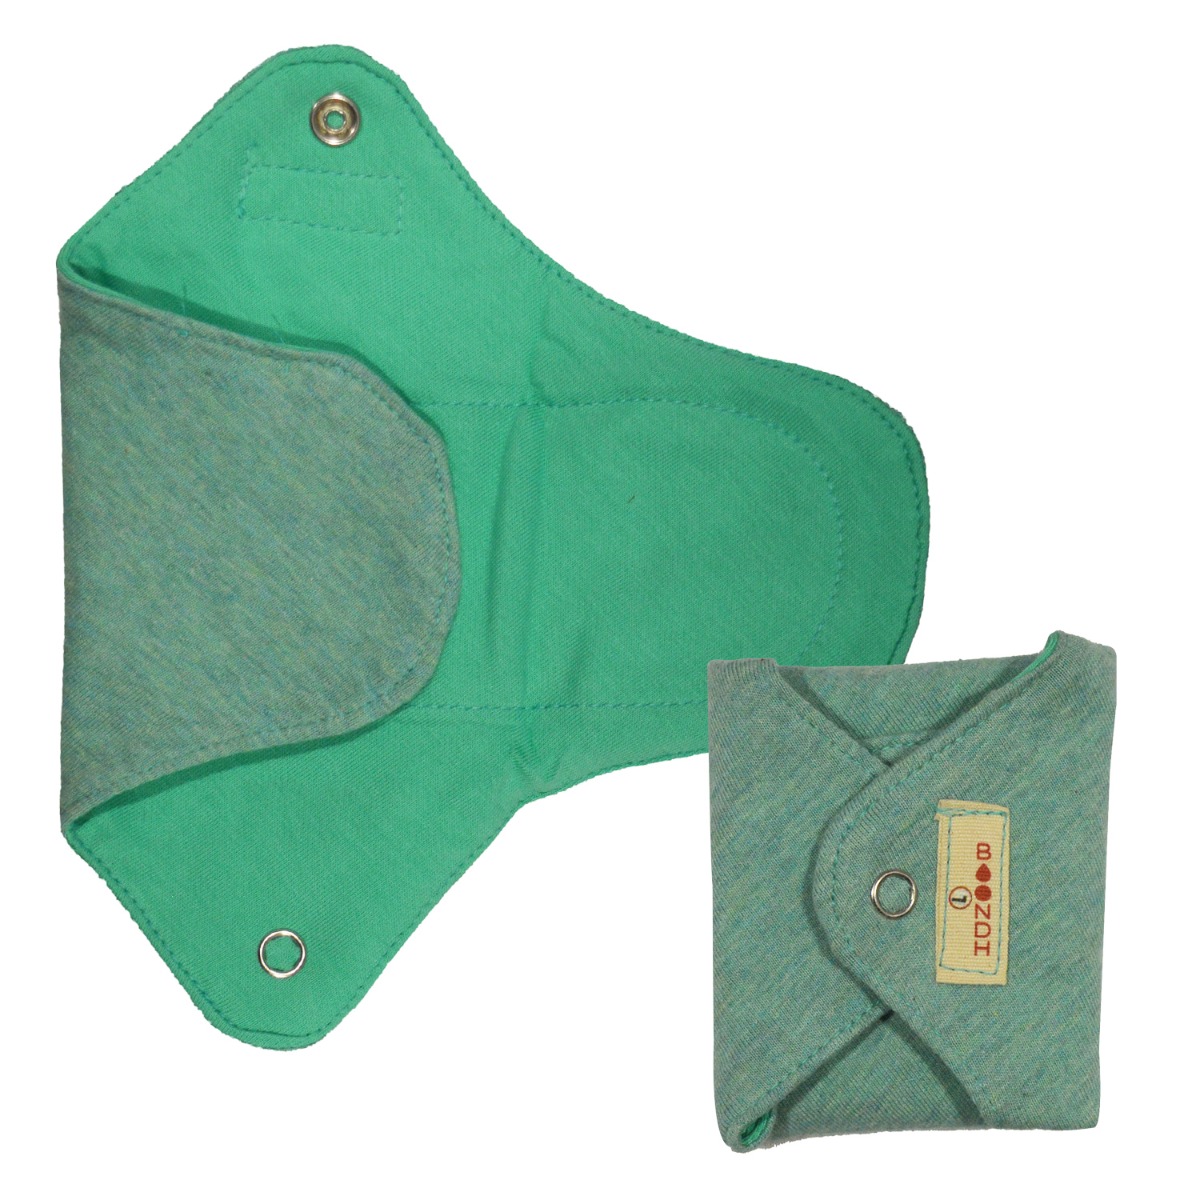 Boondh Cloth Pad: Large Size - Aqua Teal